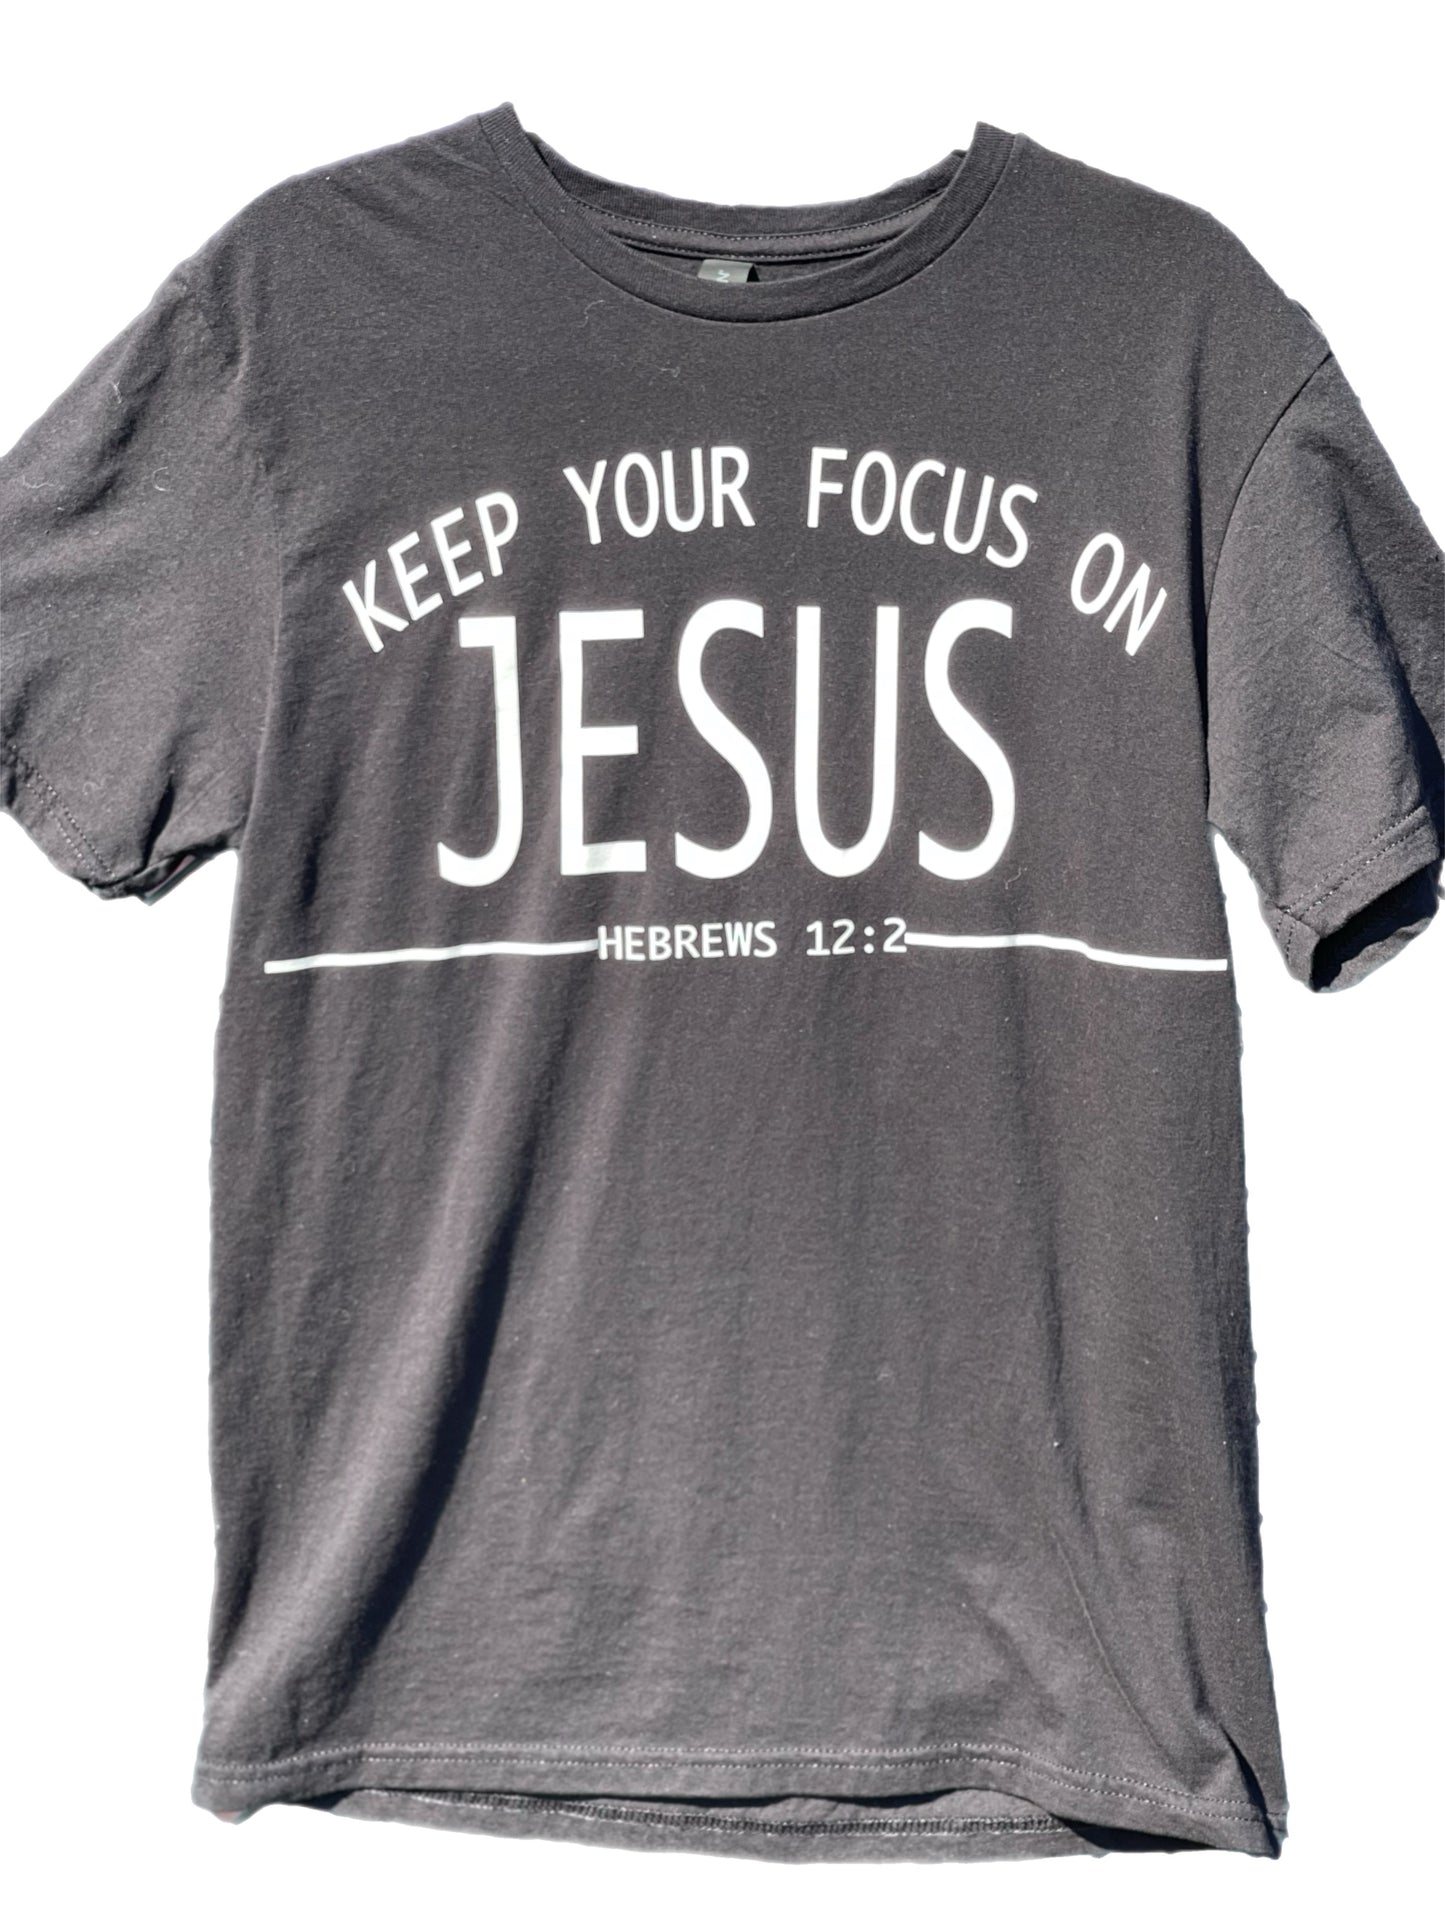 Keep Your Focus On JESUS!